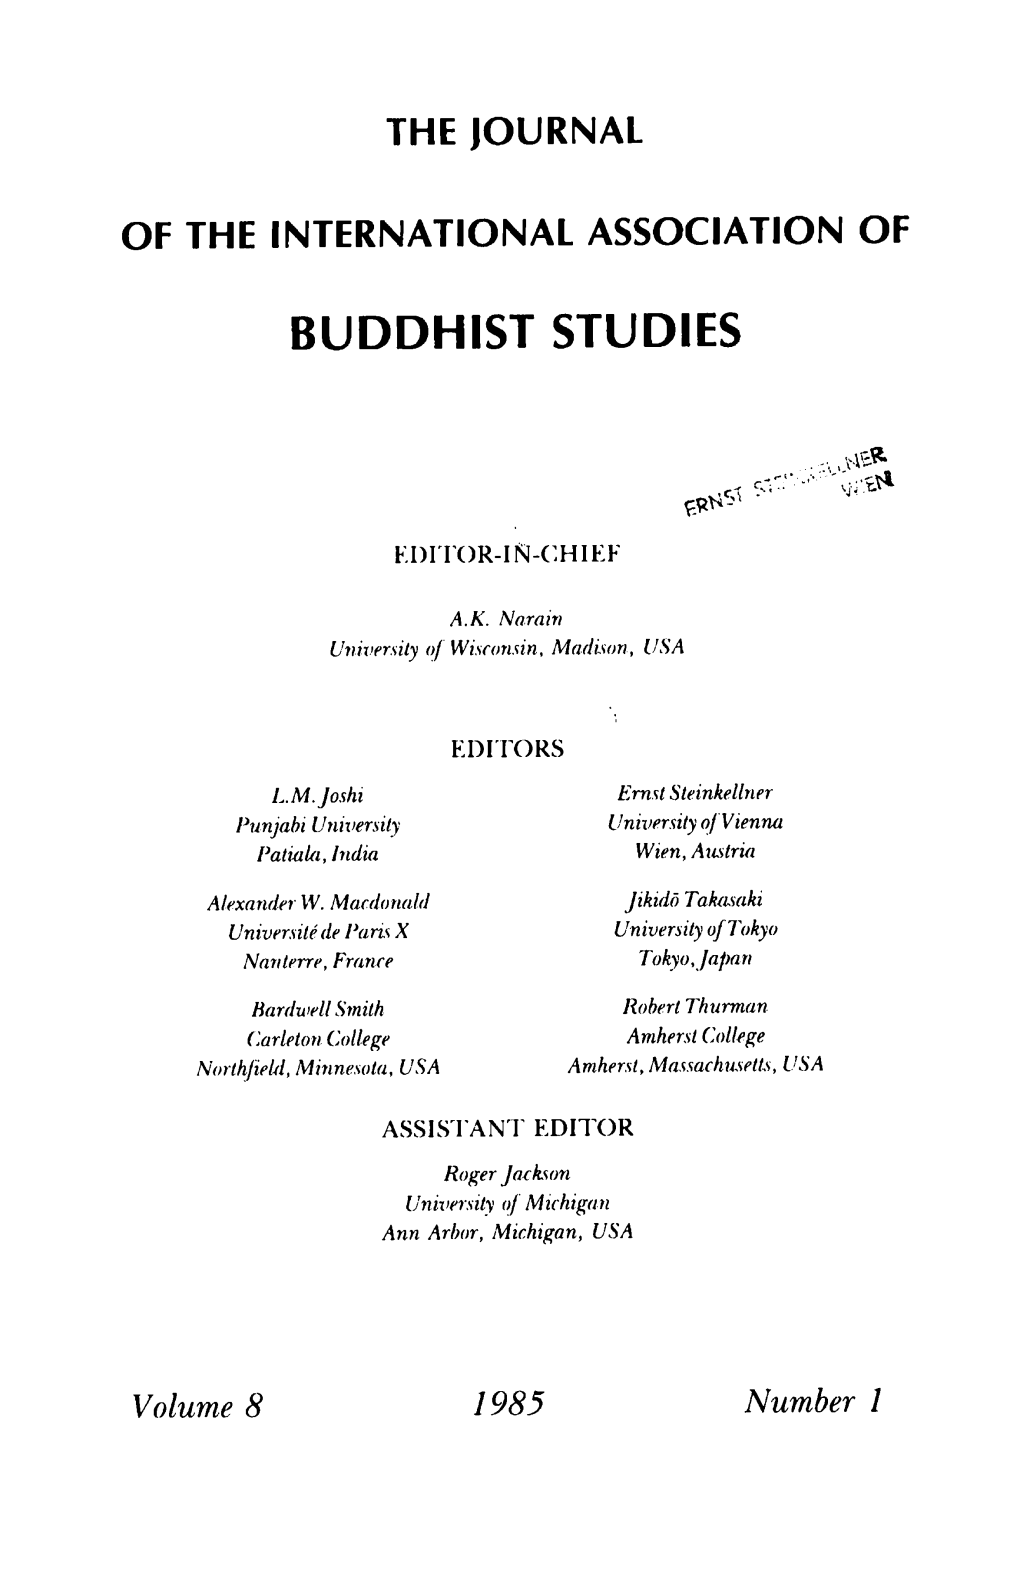 The World of Buddhism (Ed. Heinz Bechert & Richard Gombrich)